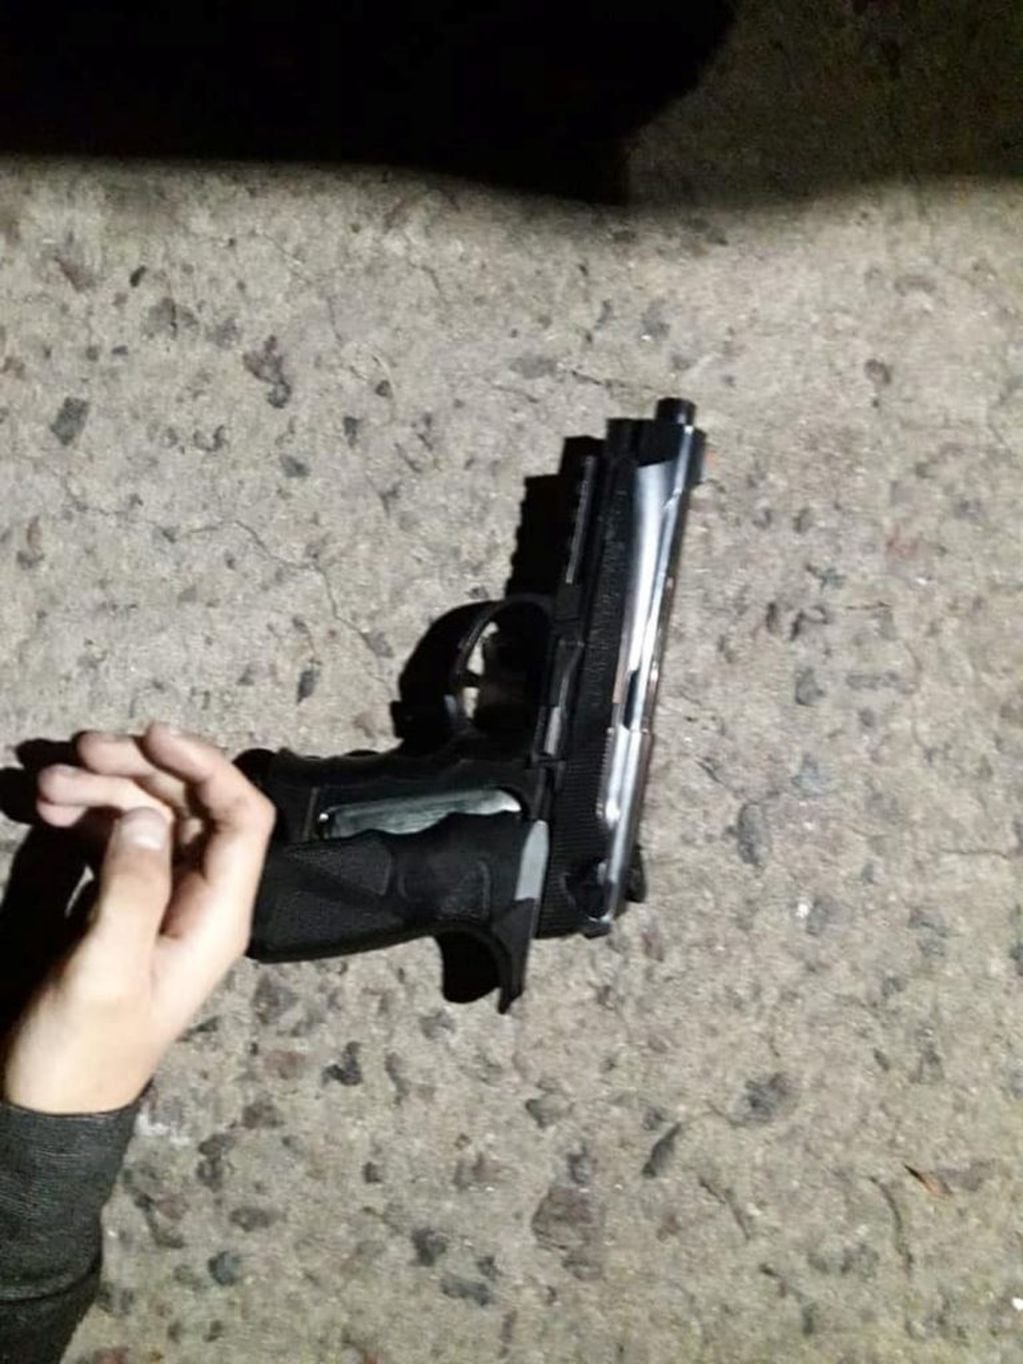 La pistola de juguete (Foto: Clarín)